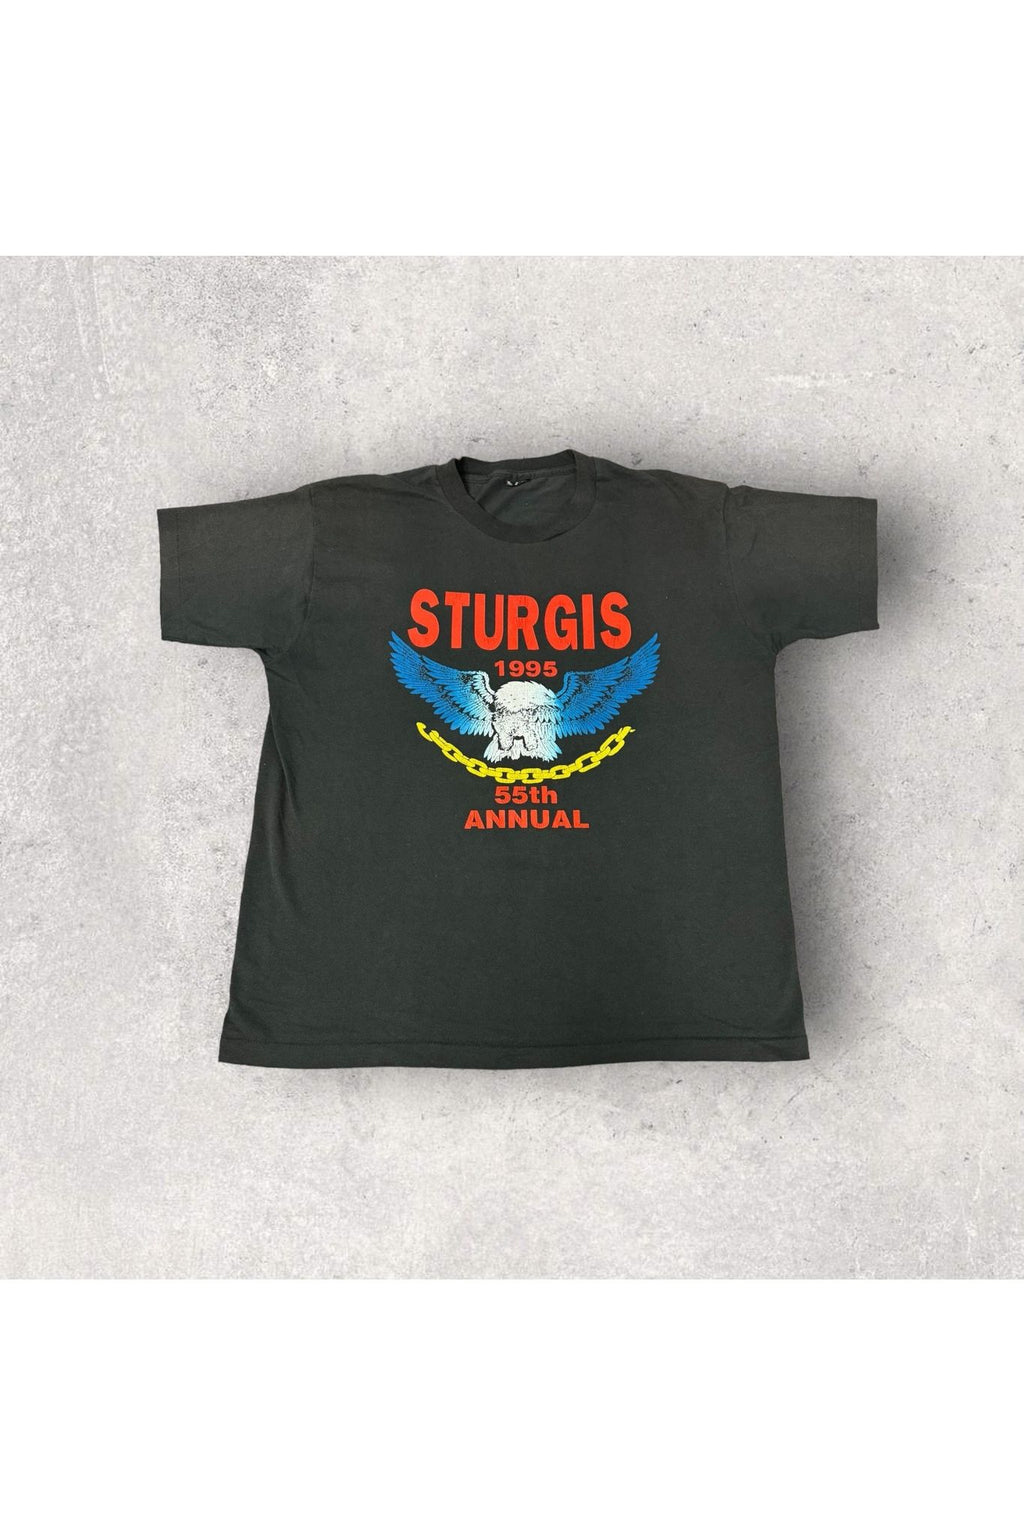 Vintage Best Screen Stars 1995 Sturgis Tee- XL